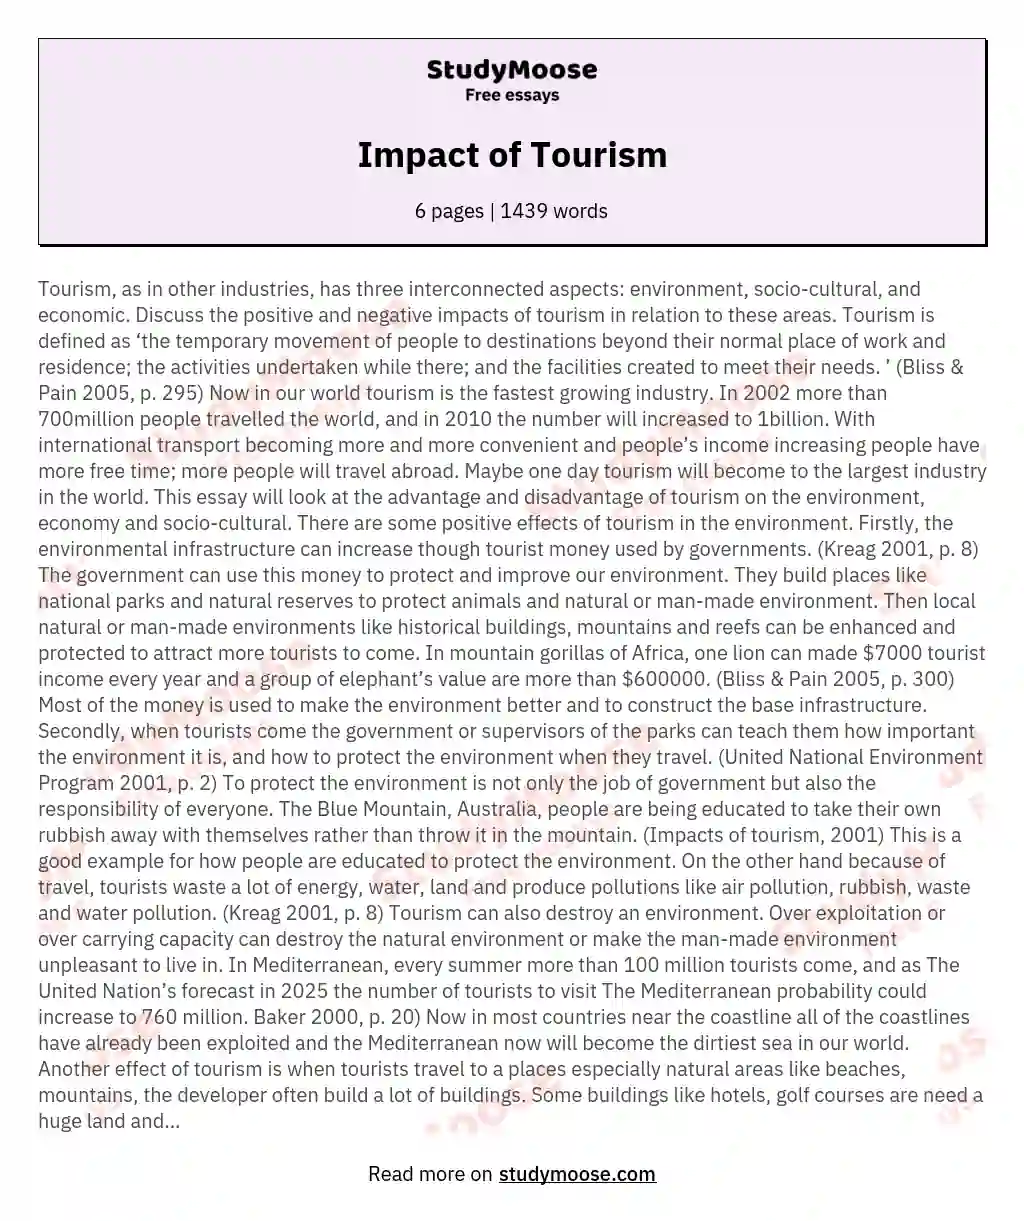 Impact of Tourism